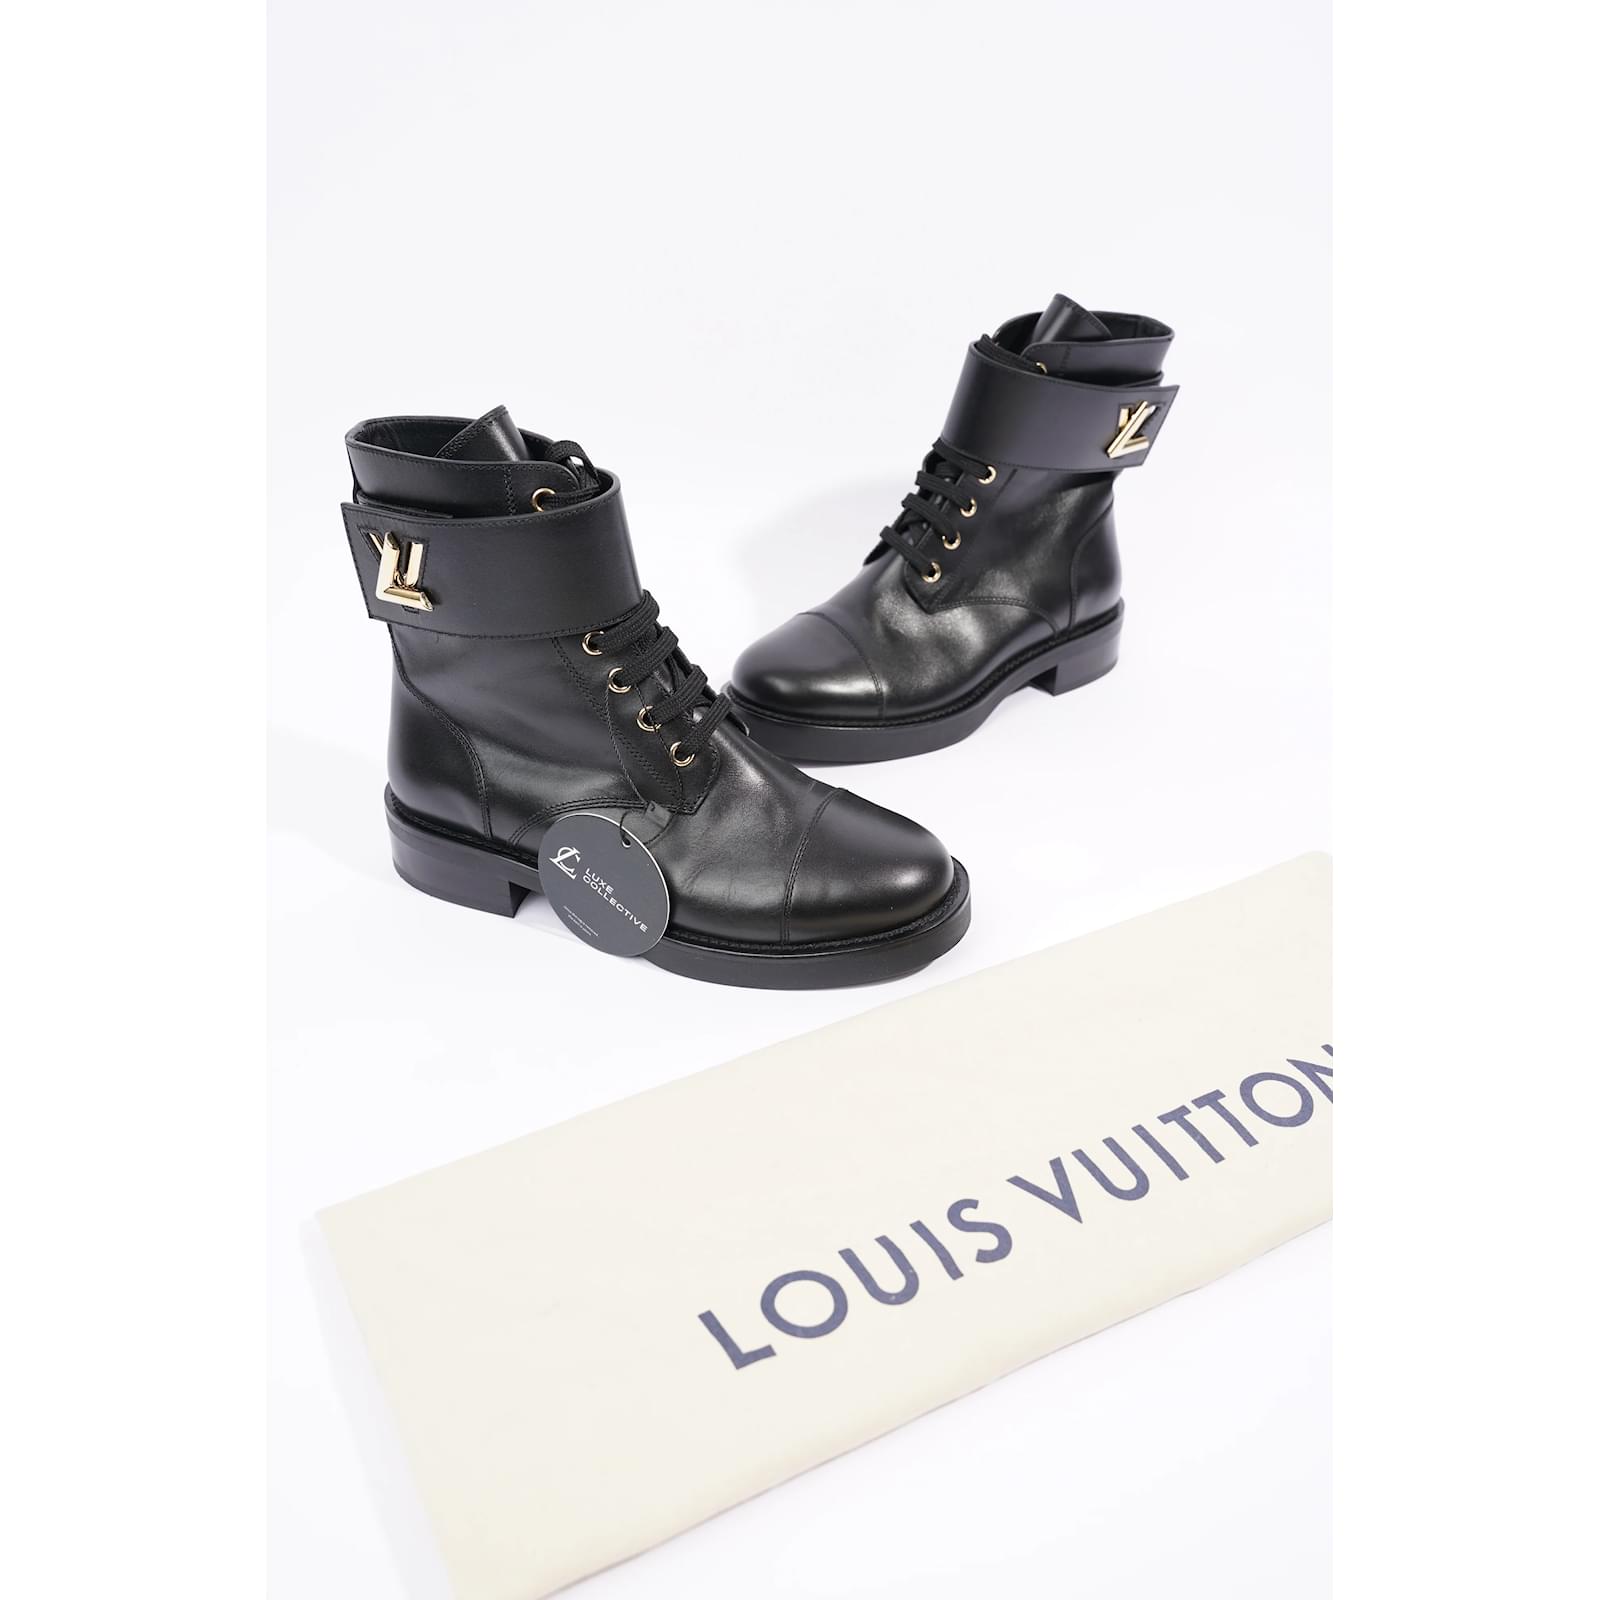 Louis Vuitton Wonderland Ranger boots Black